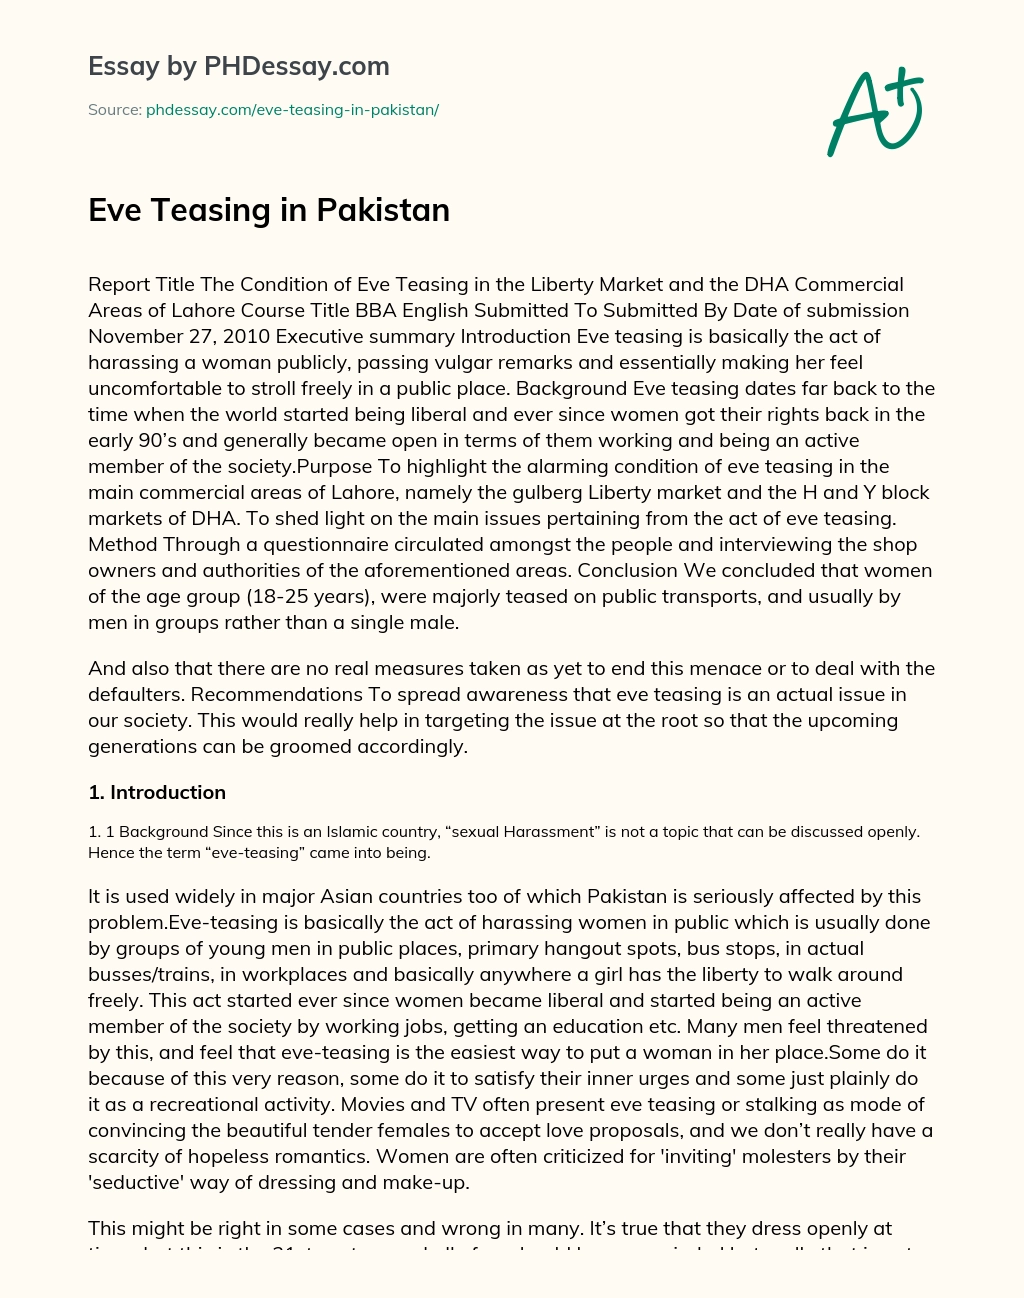 Eve Teasing in Pakistan essay